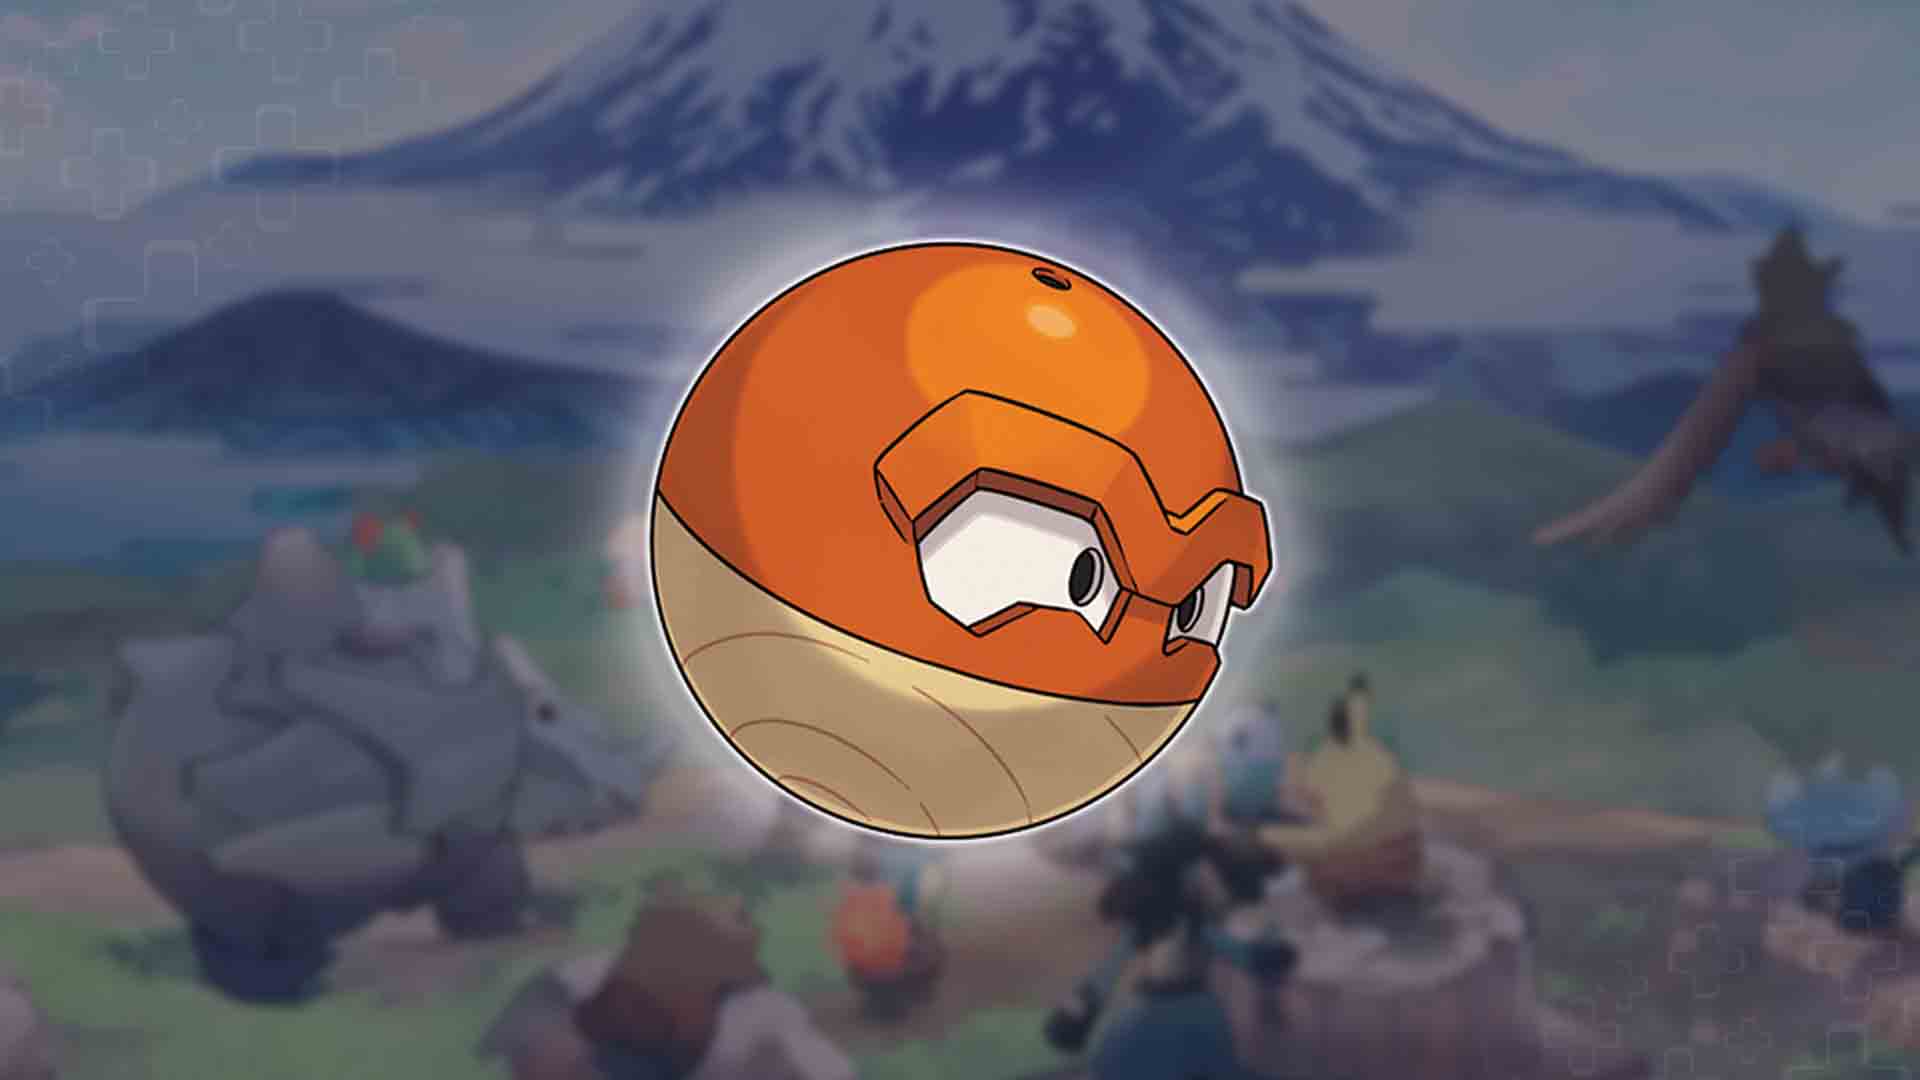 Voltorb found in the Hisui region of the Pokémon Legends: Arceus